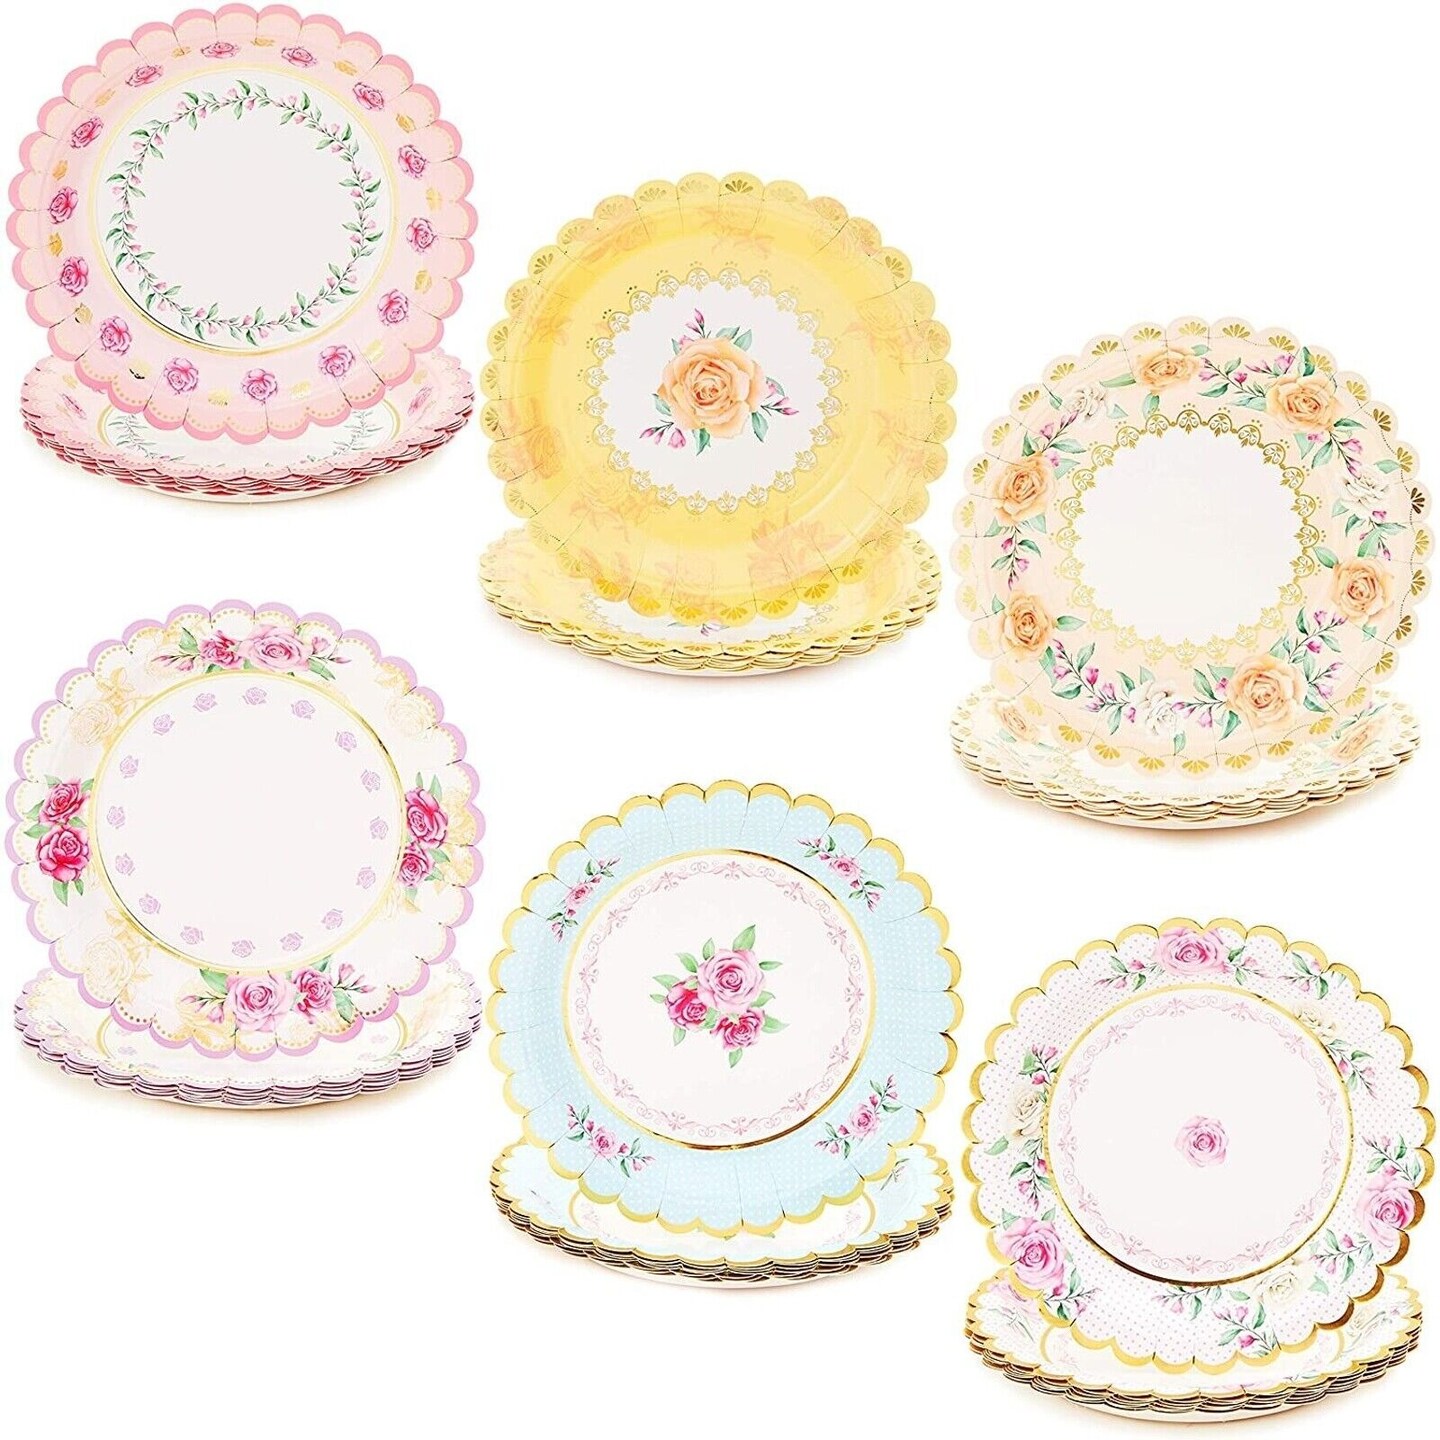 48 Floral Paper Plates for Vintage Tea Party, Wedding, Bridal, Baby Shower